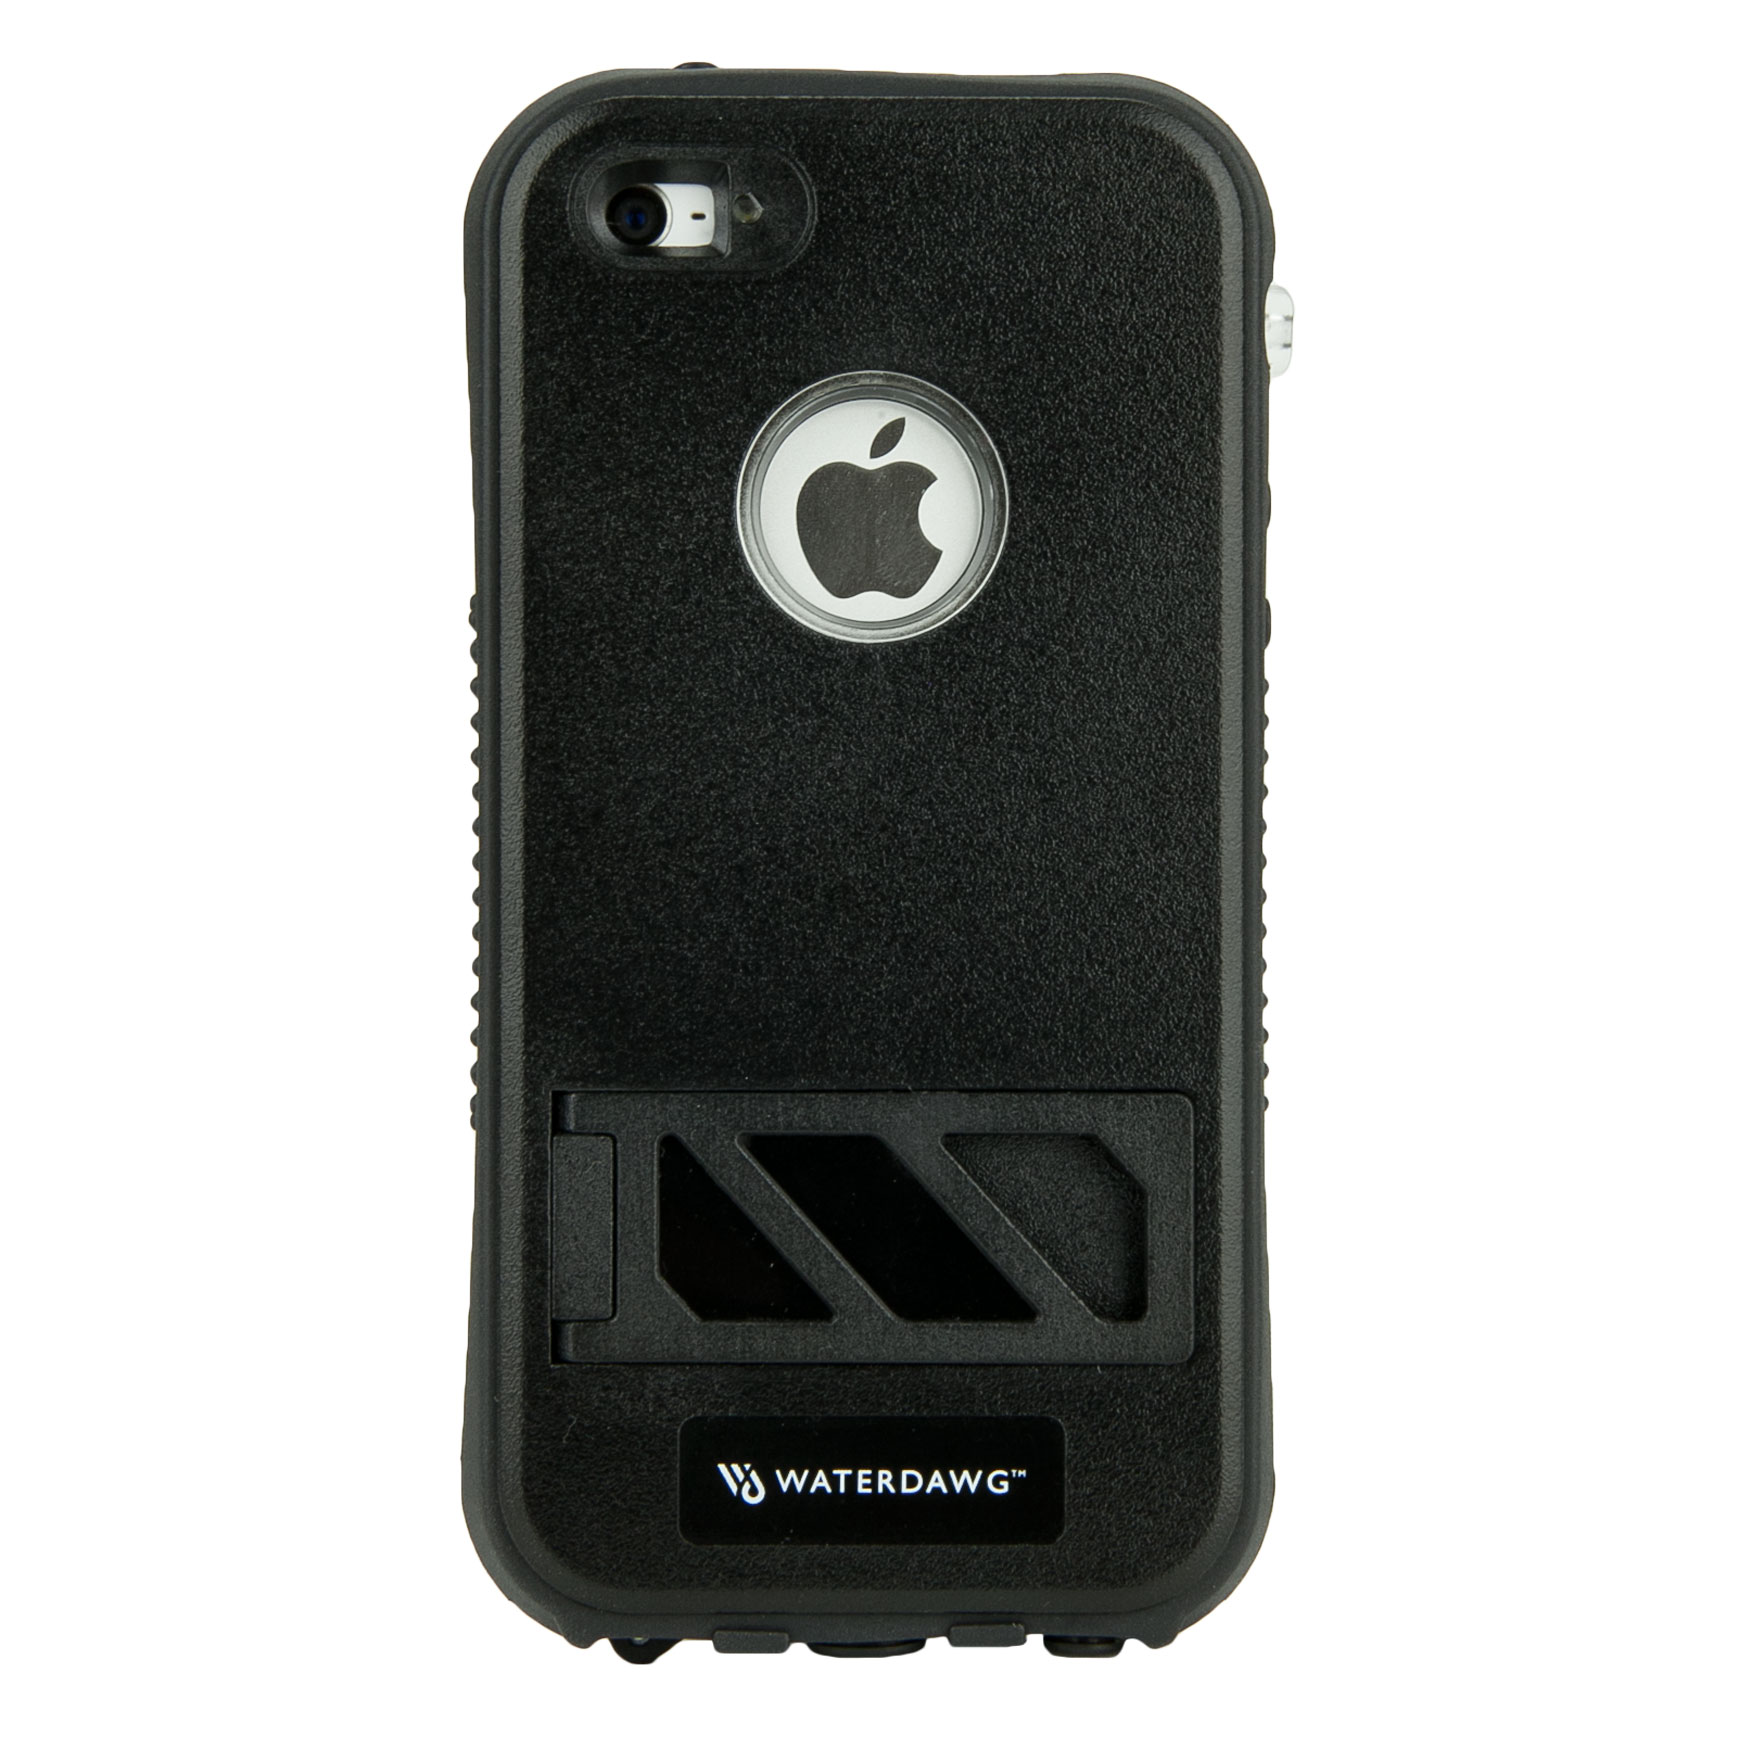 Wetsuit Waterproof Case for iPhone 5 by WaterDawg